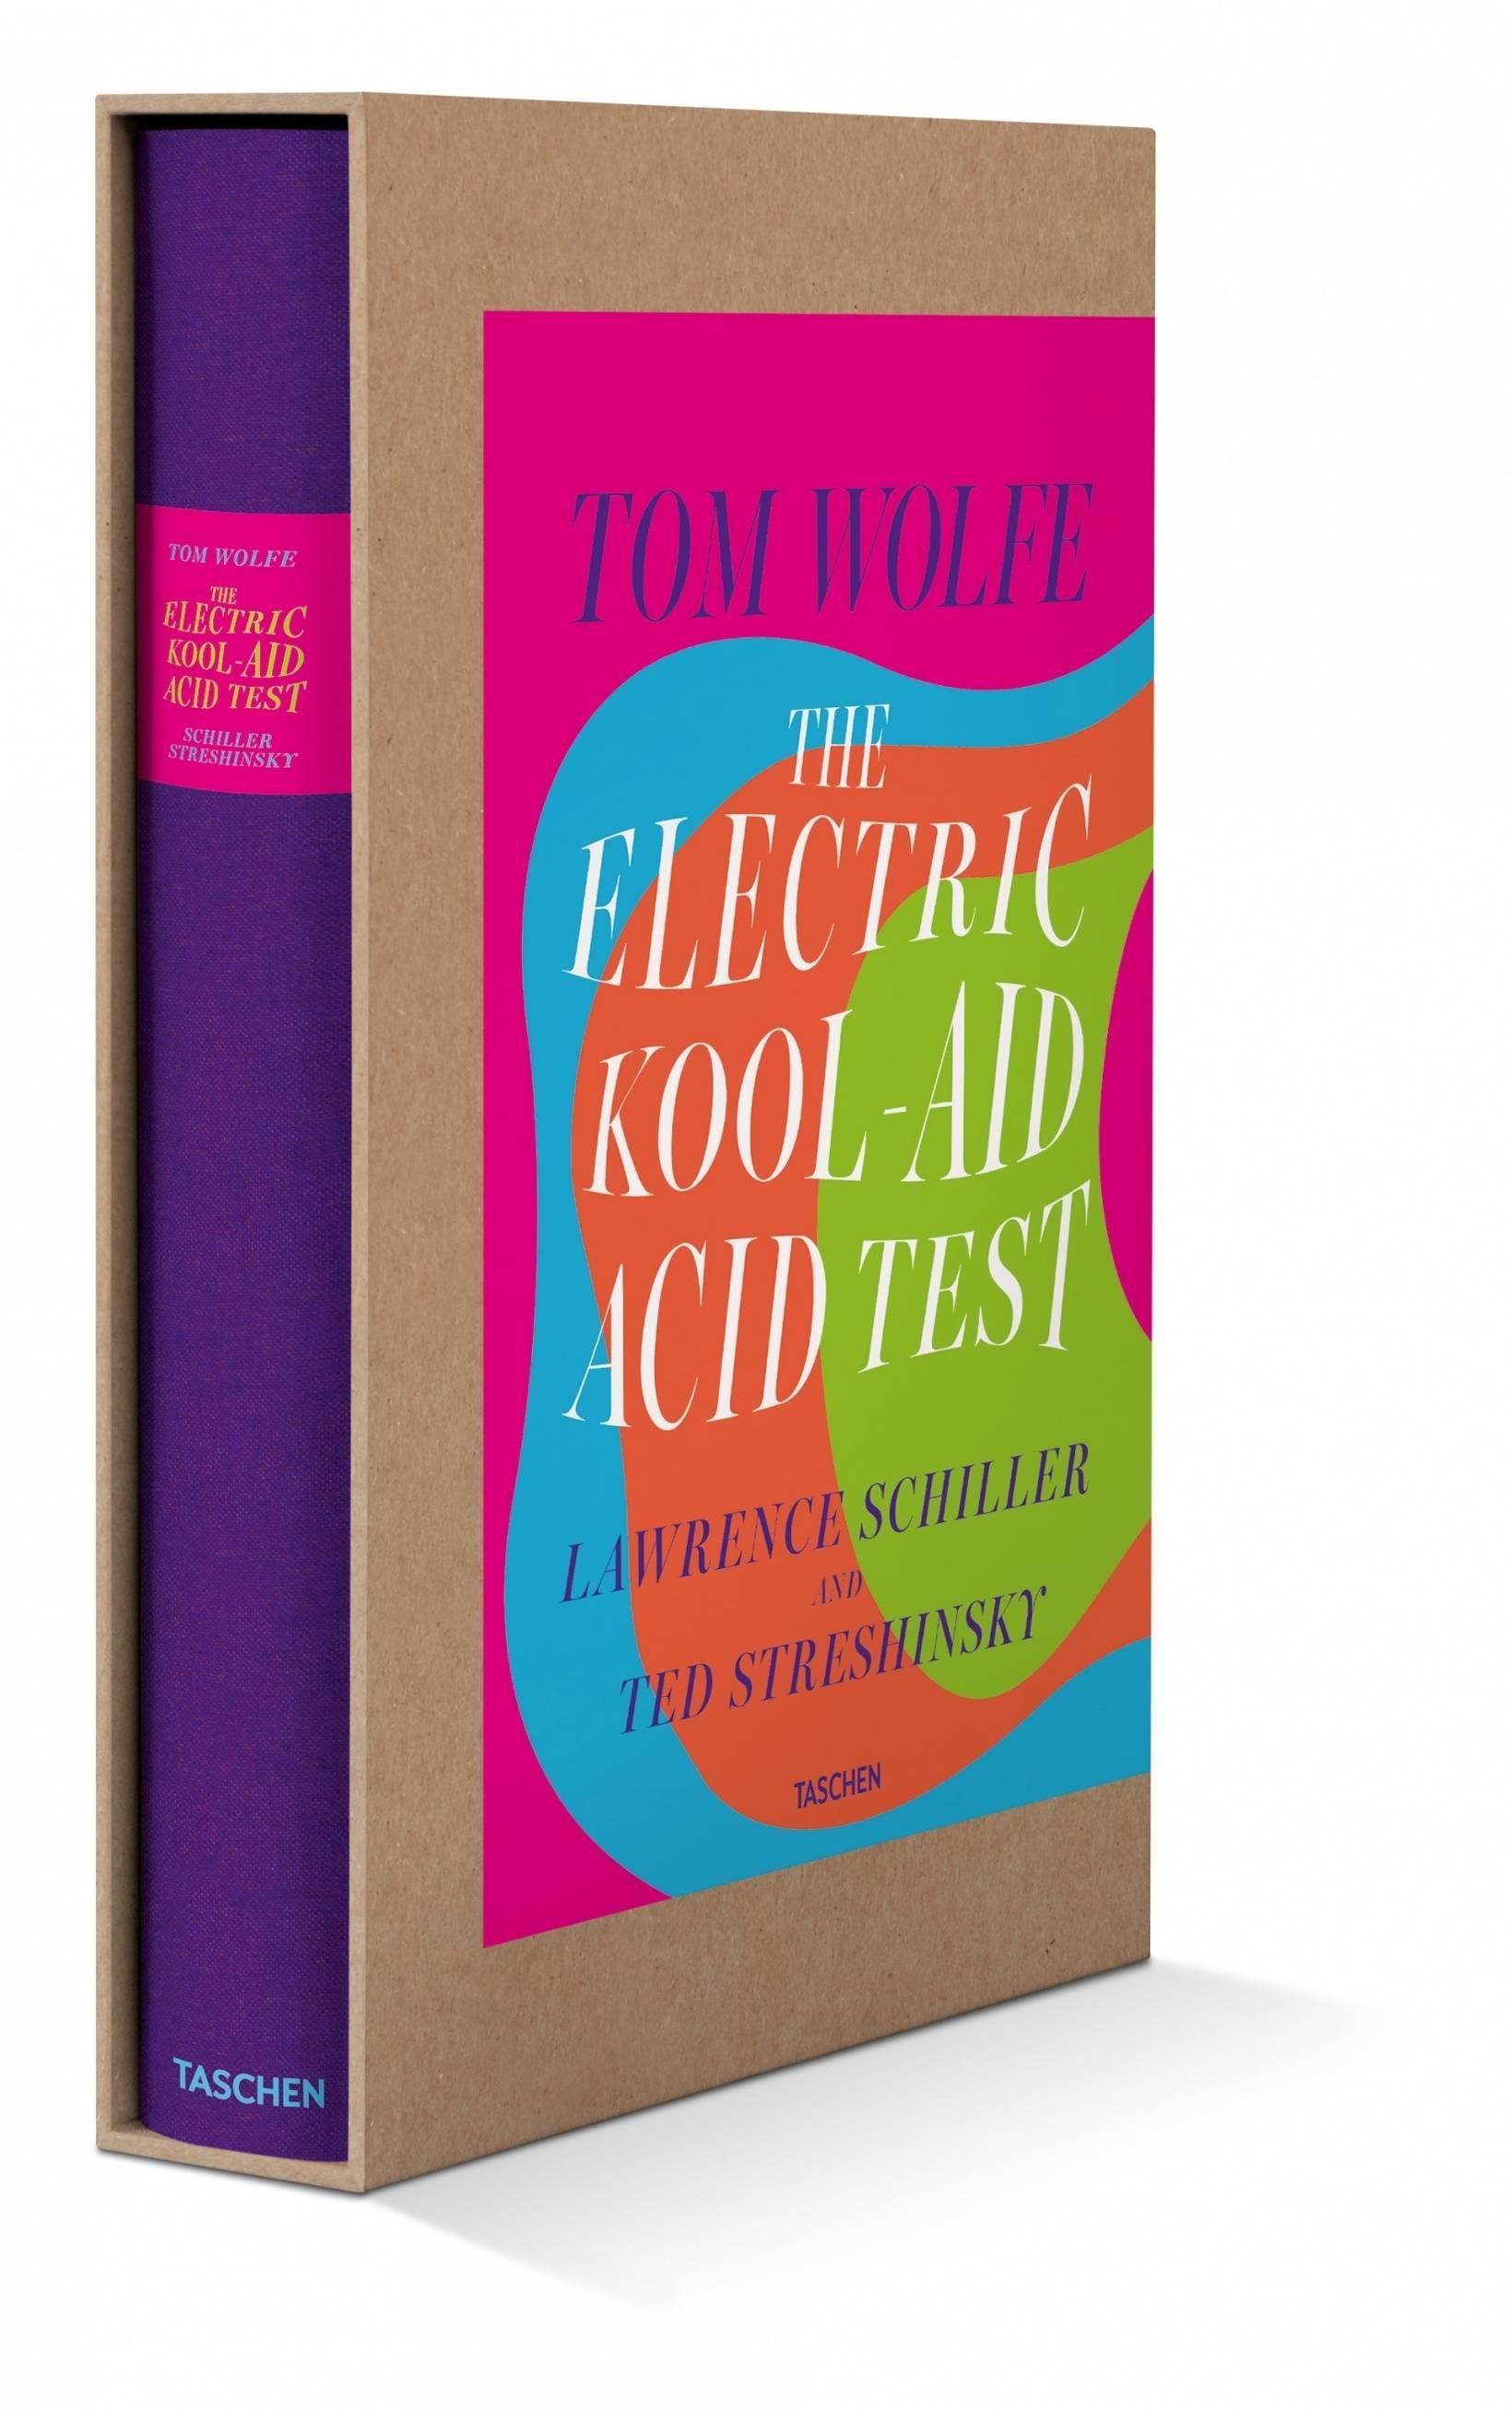 European Tom Wolfe, The Electric Kool-Aid Acid Test, Art Edition 